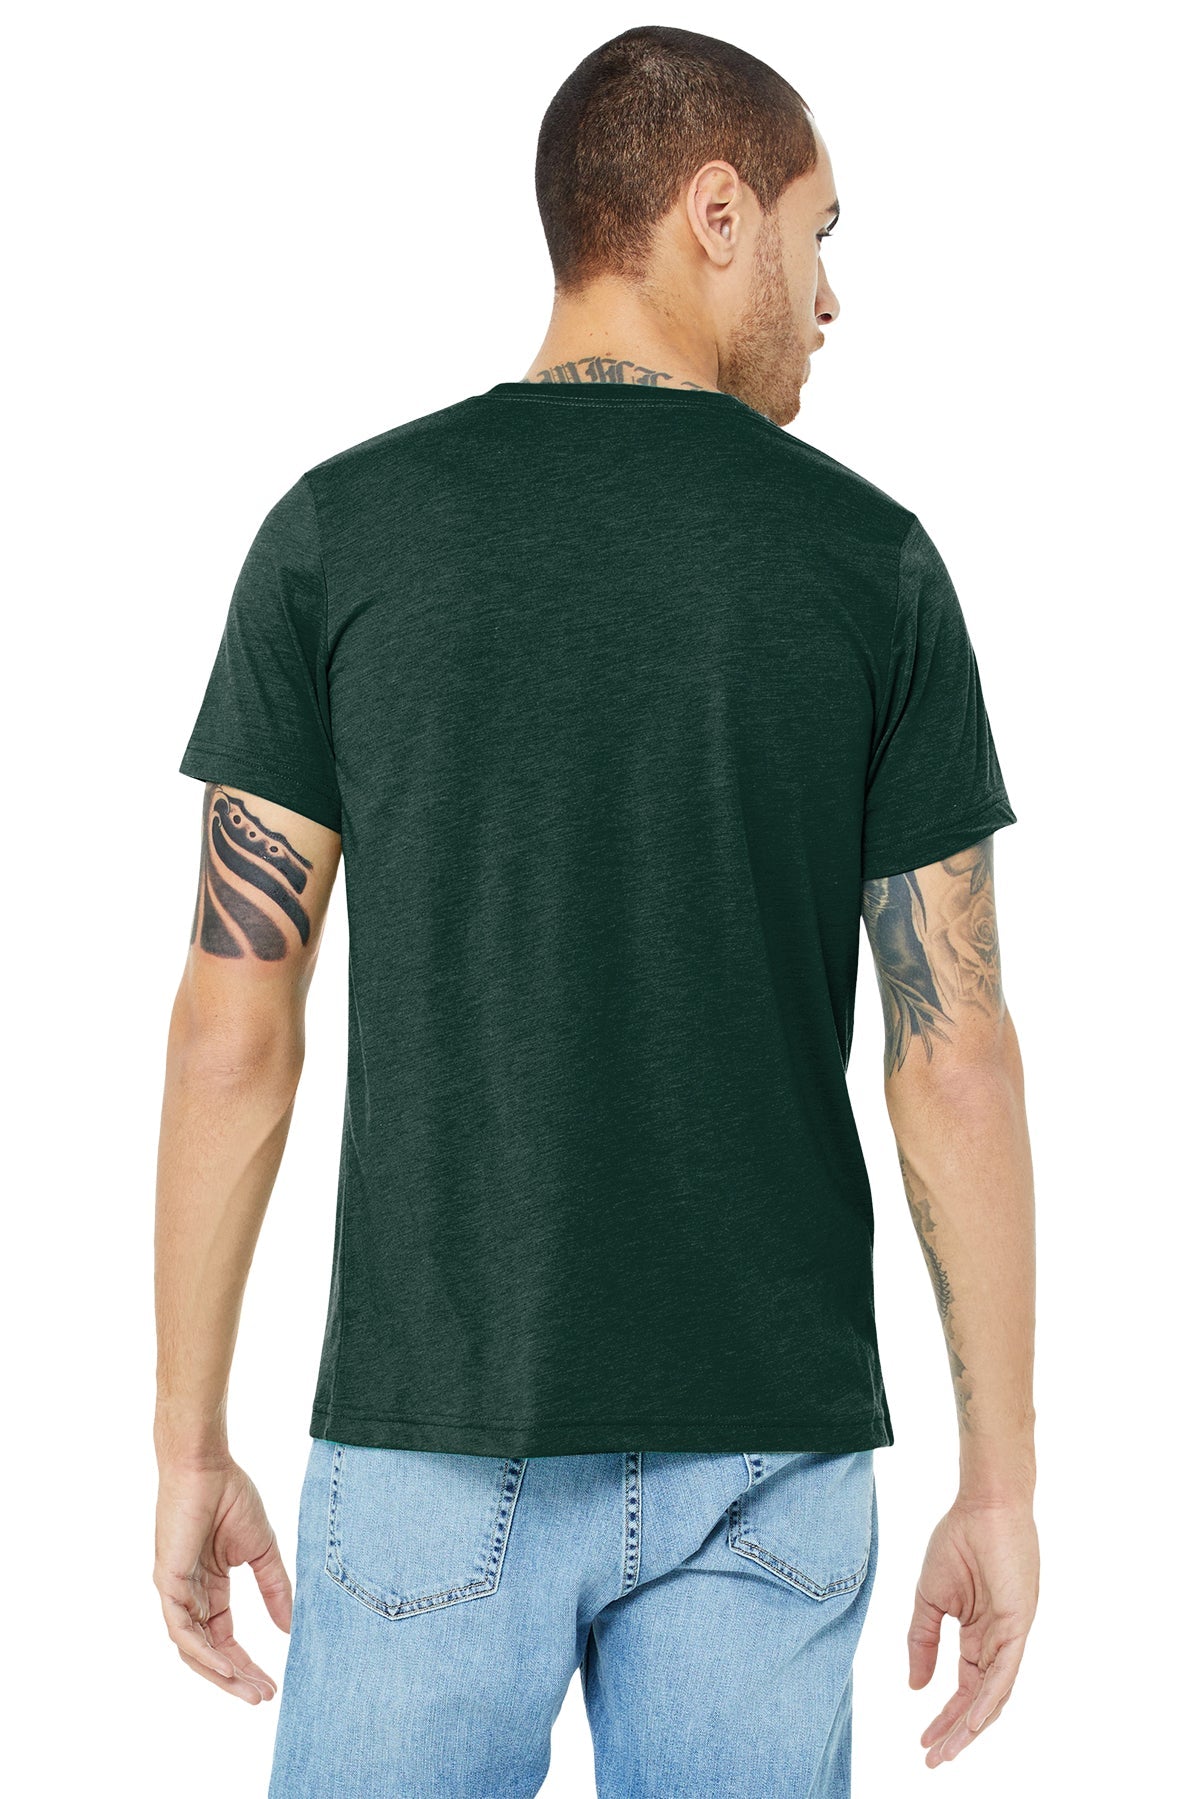 bella + canvas unisex triblend short sleeve t-shirt 3413c emerald triblend